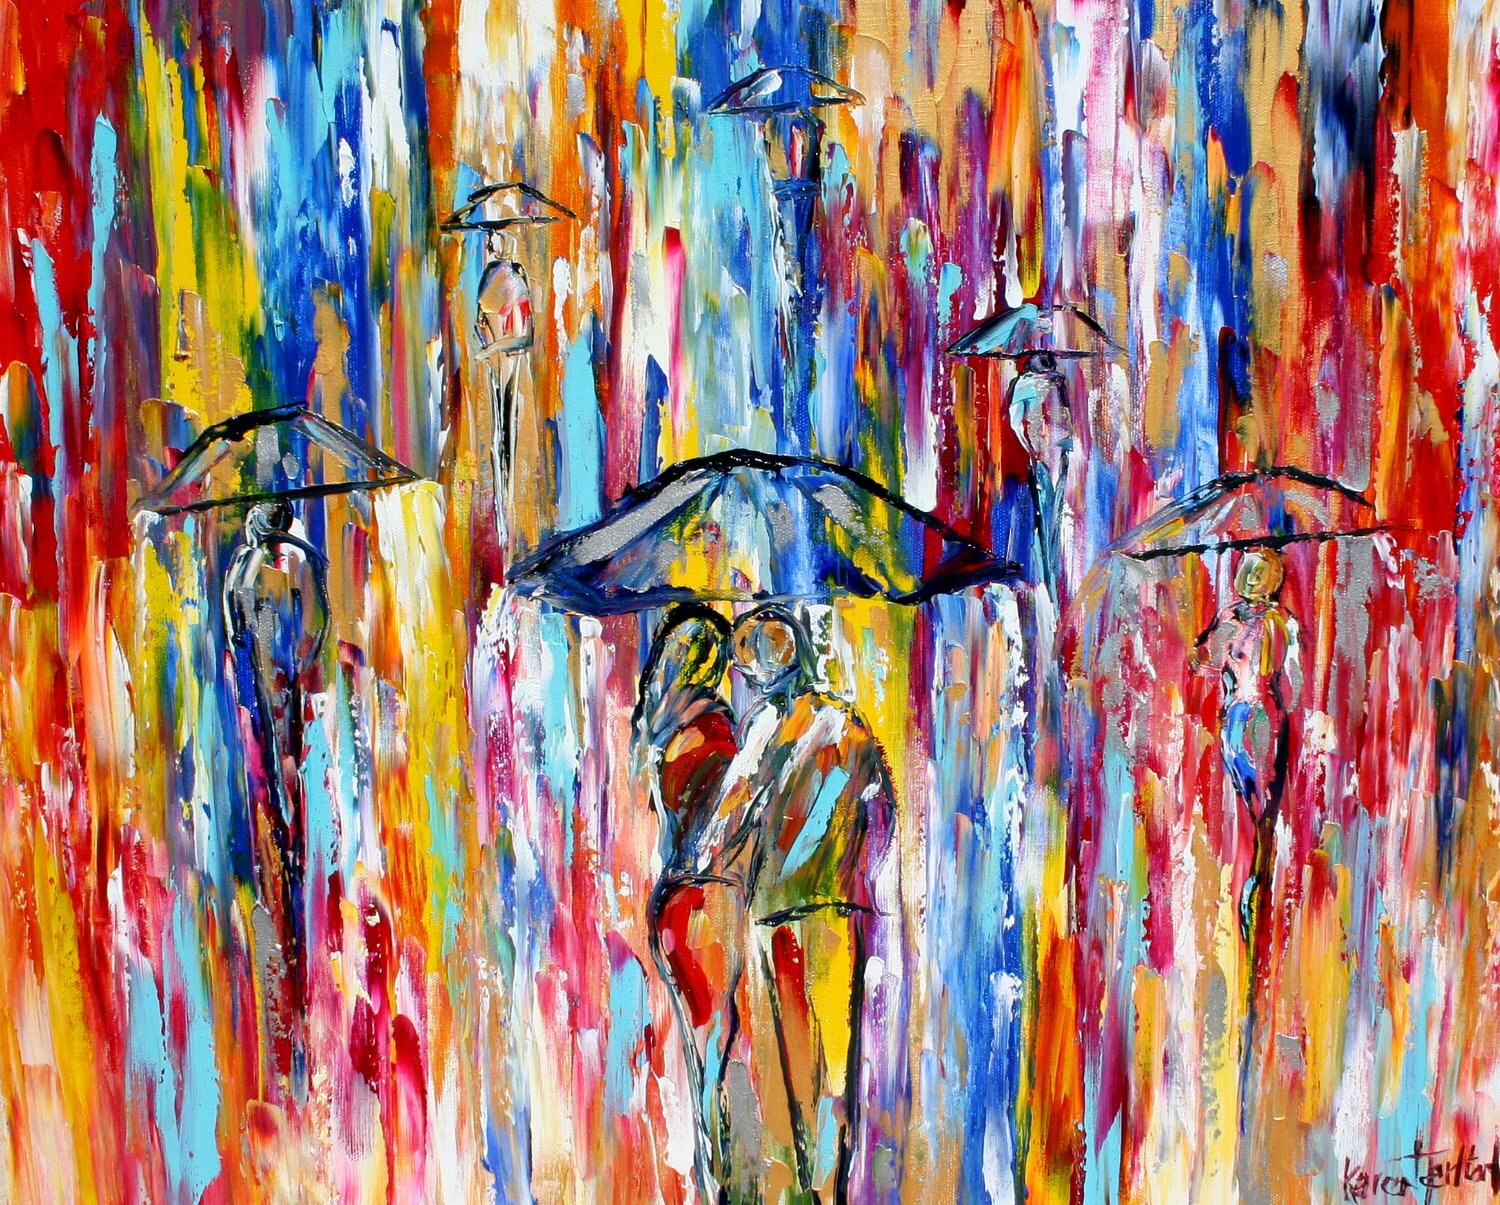 Fine art Print - Abstract City Rain - from oil painting by Karen Tarlton - impressionistic modern art